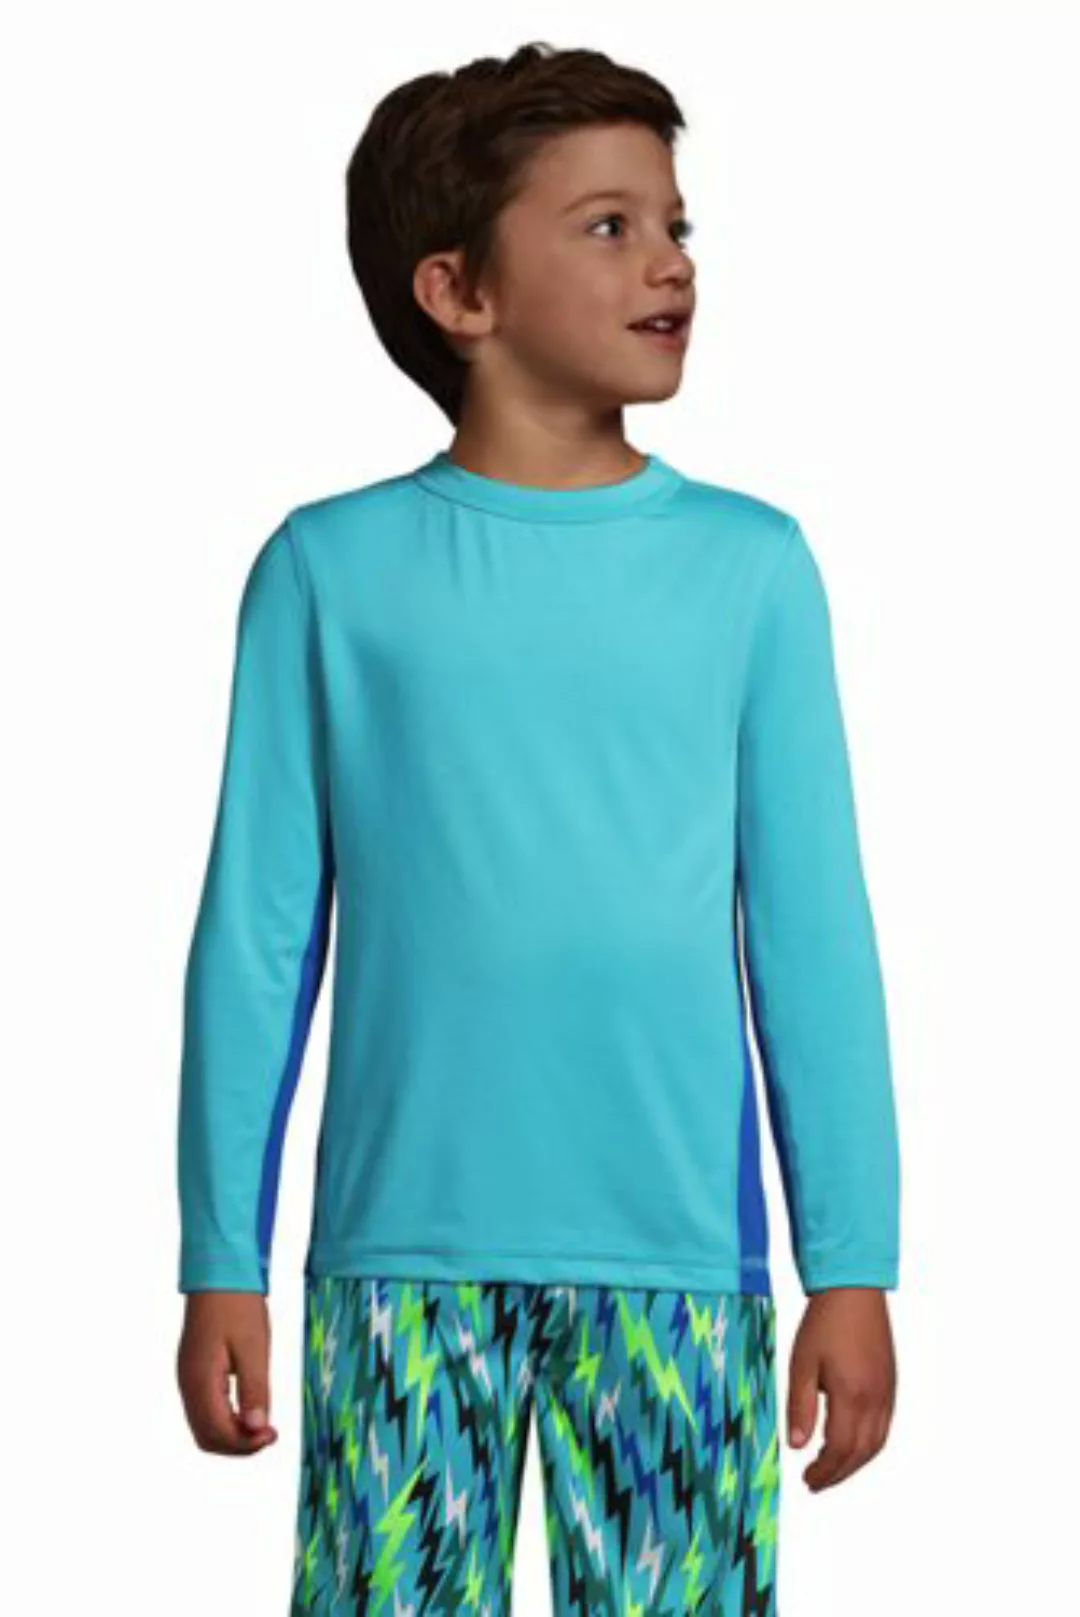 ACTIVE Langarm-Shirt, Größe: 110-116, Blau, Elasthan, by Lands' End, Scuba günstig online kaufen